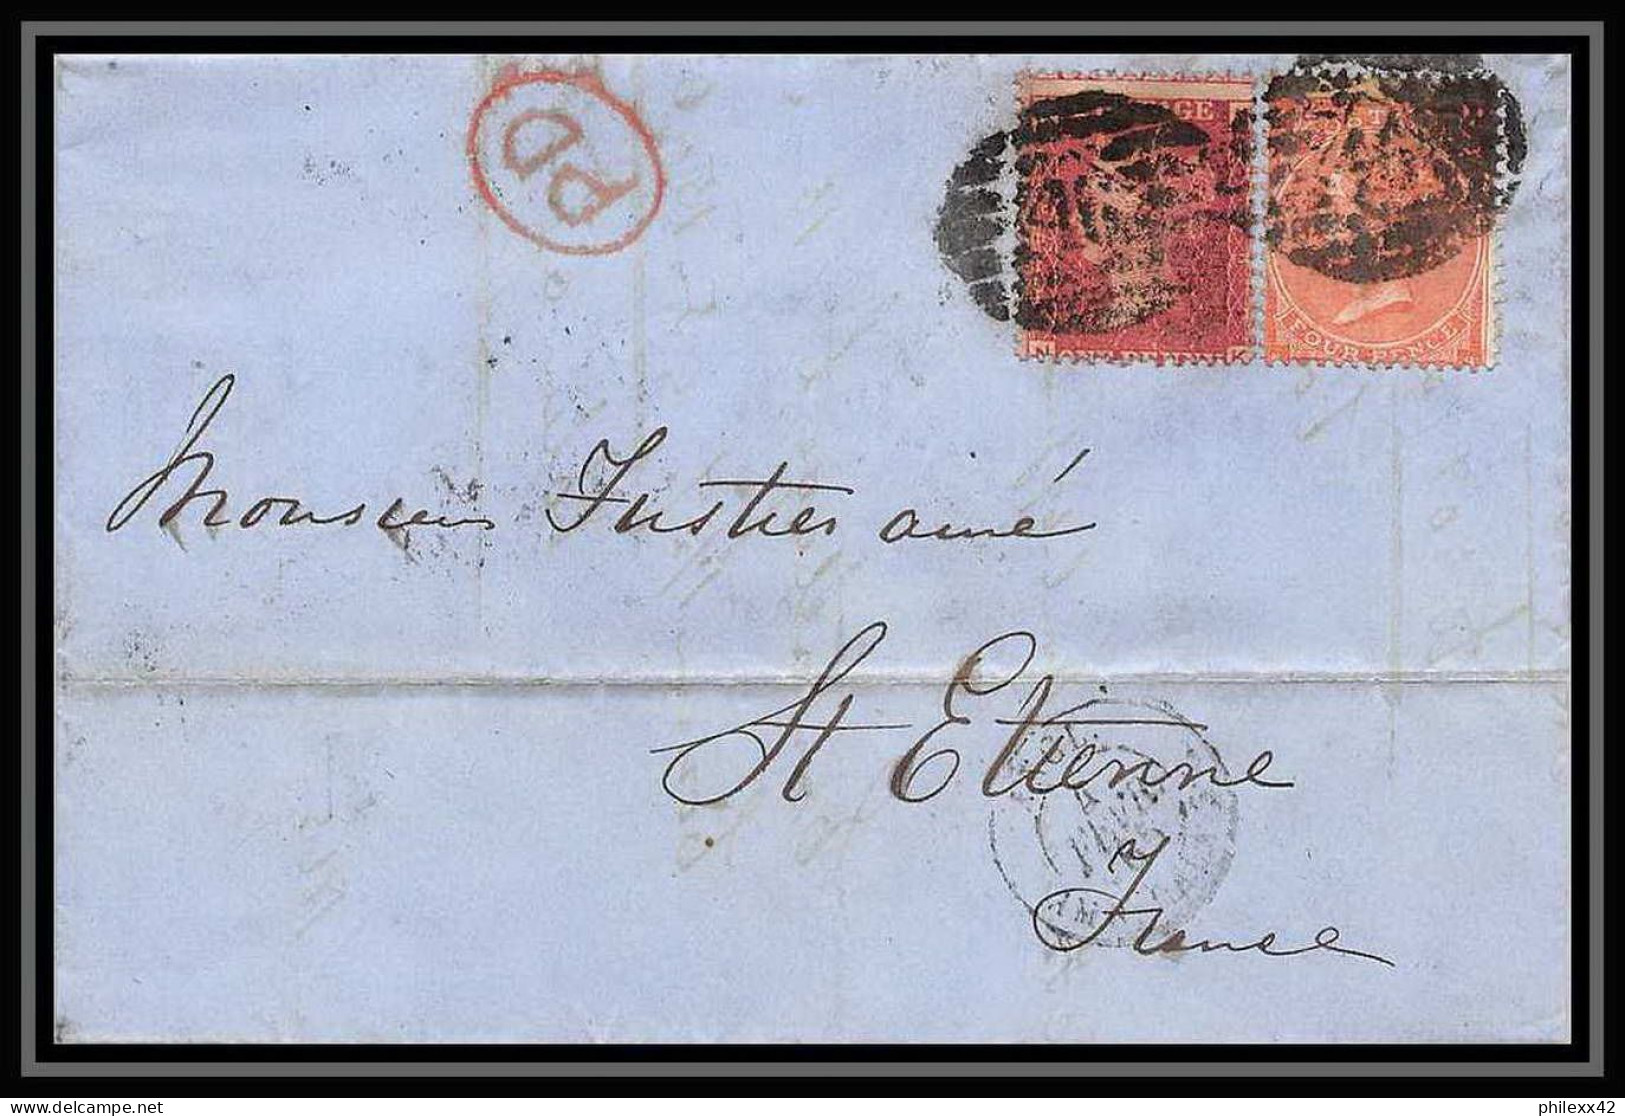 35909 N°26 + 32 Victoria London St Etienne France 1865 Lettre Cover Grande Bretagne England - Briefe U. Dokumente